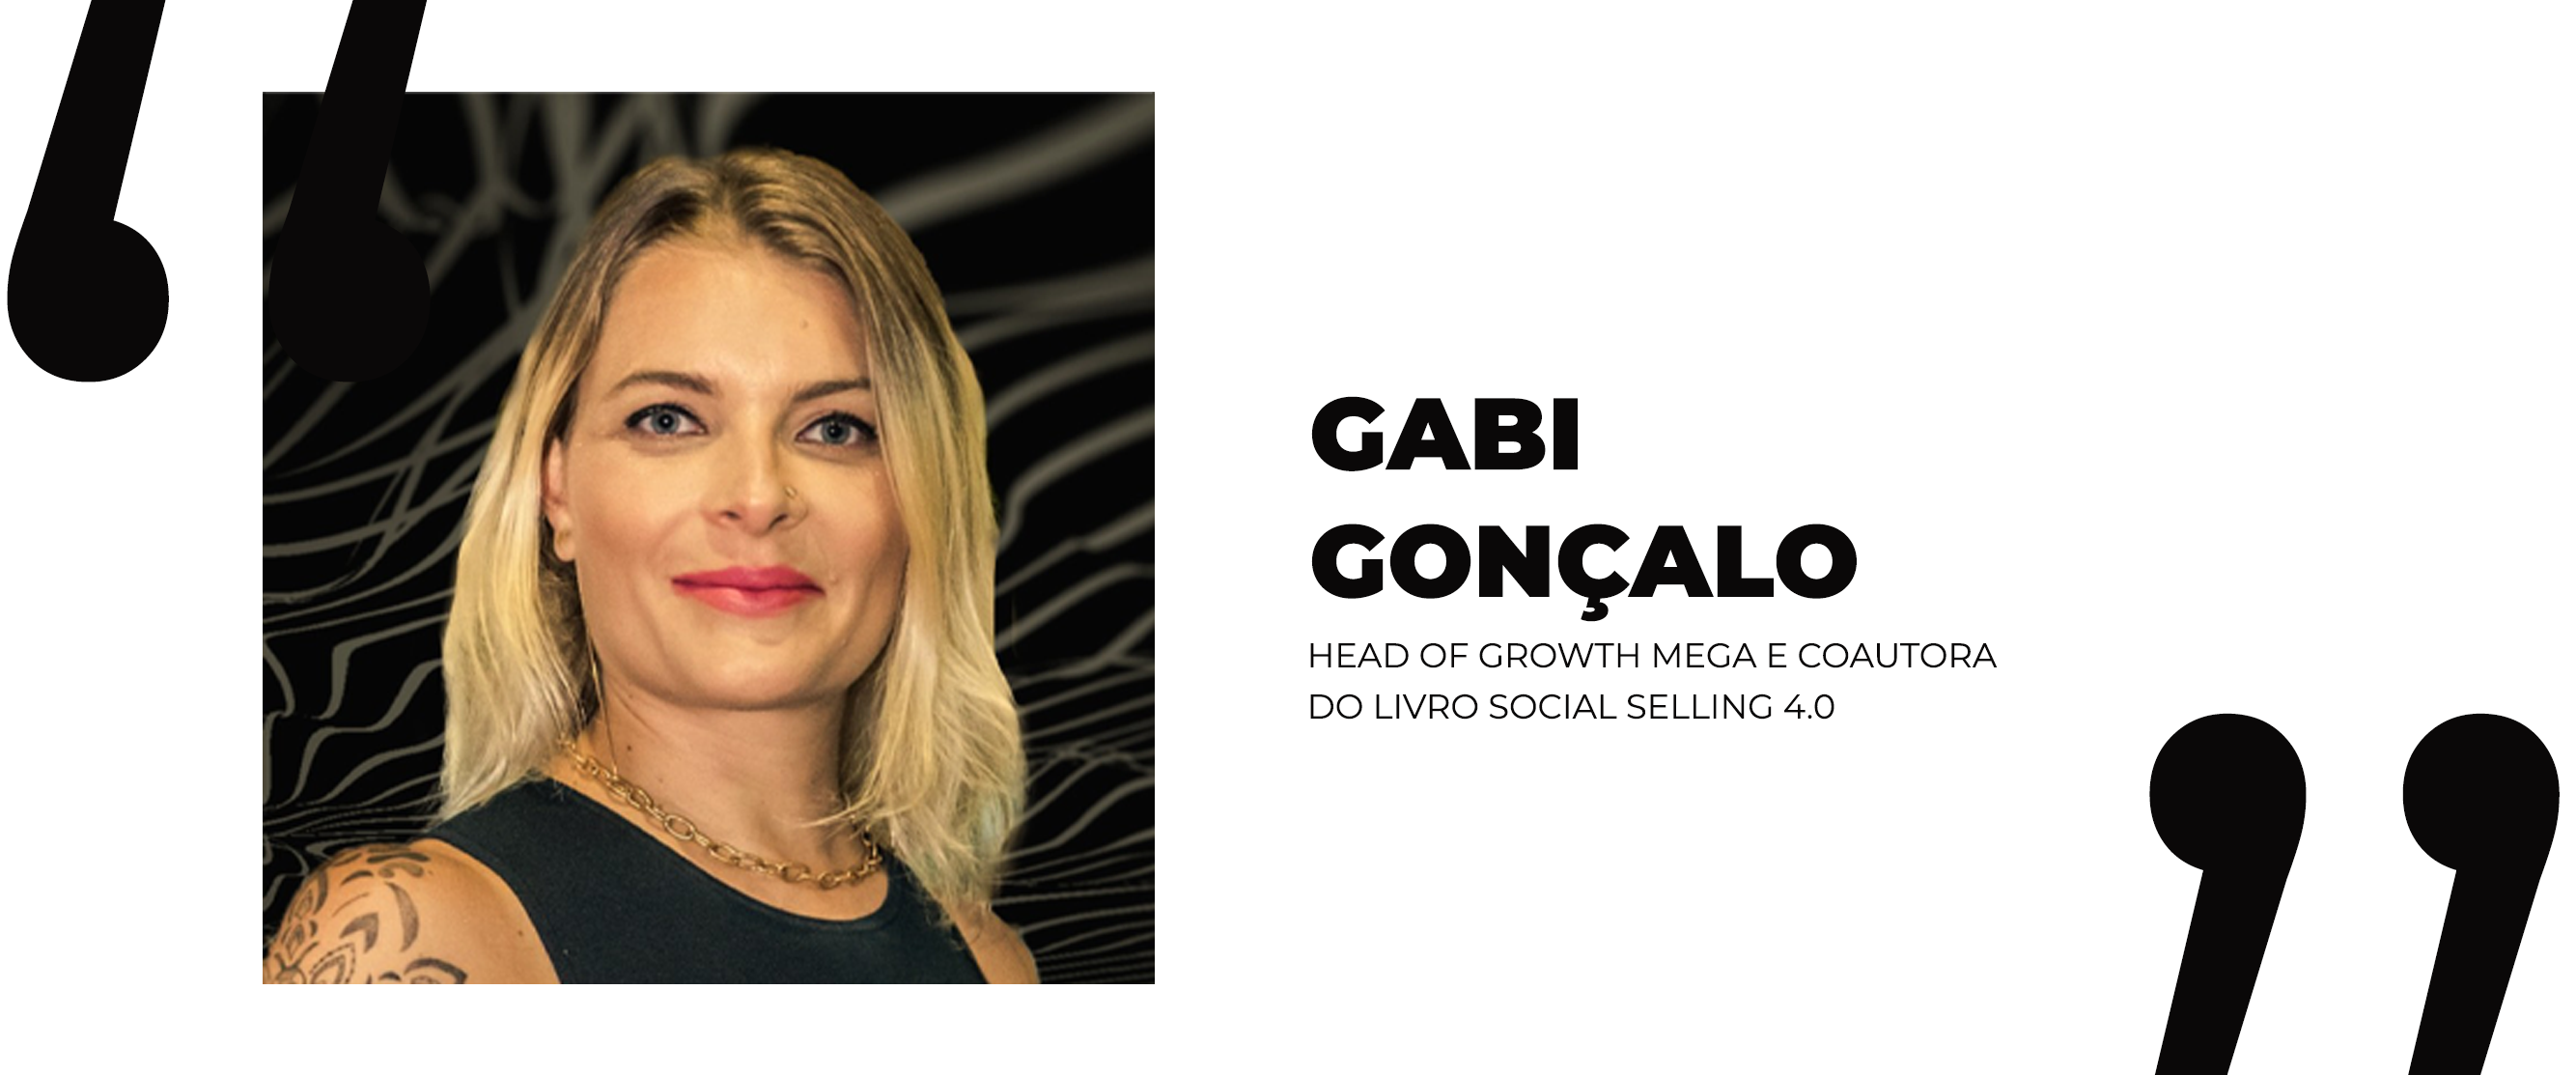 Gabi Gonçalo, Head of Growth MEGA e coautora do livro Social Selling 4.0.